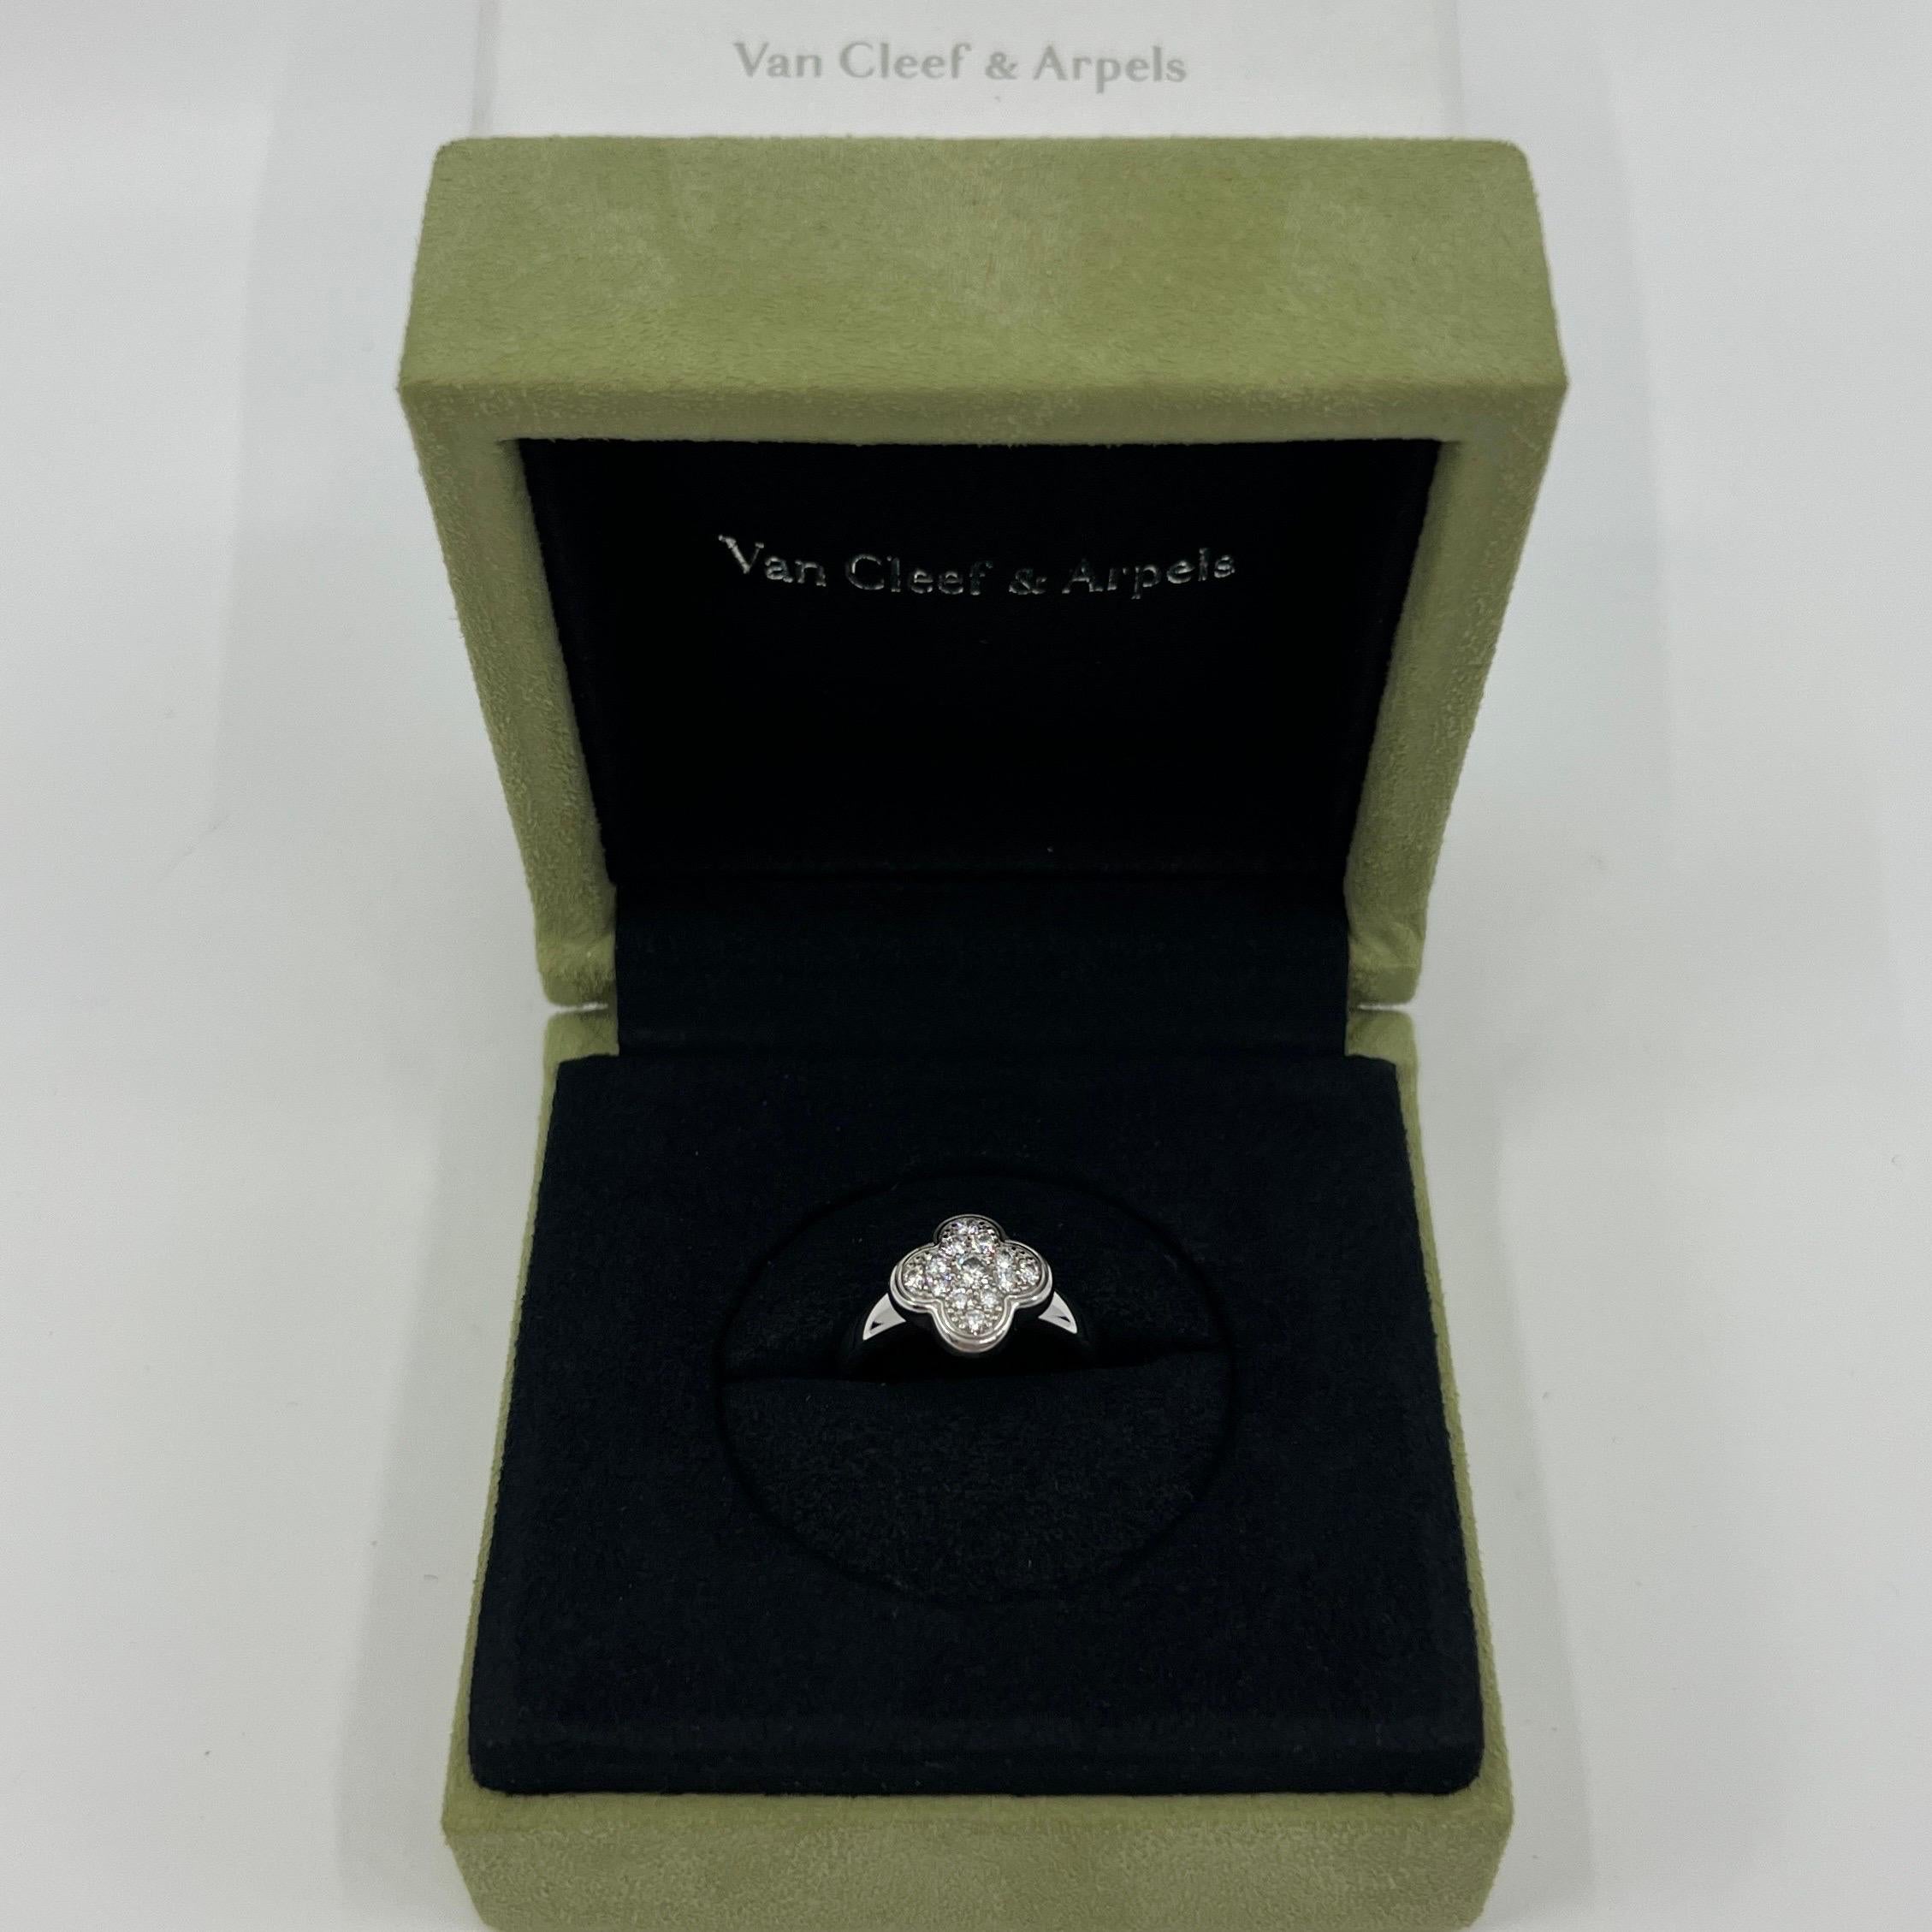 Rare Vintage Van Cleef & Arpels Pure Alhambra Diamond Flower 18k White Gold Ring For Sale 3